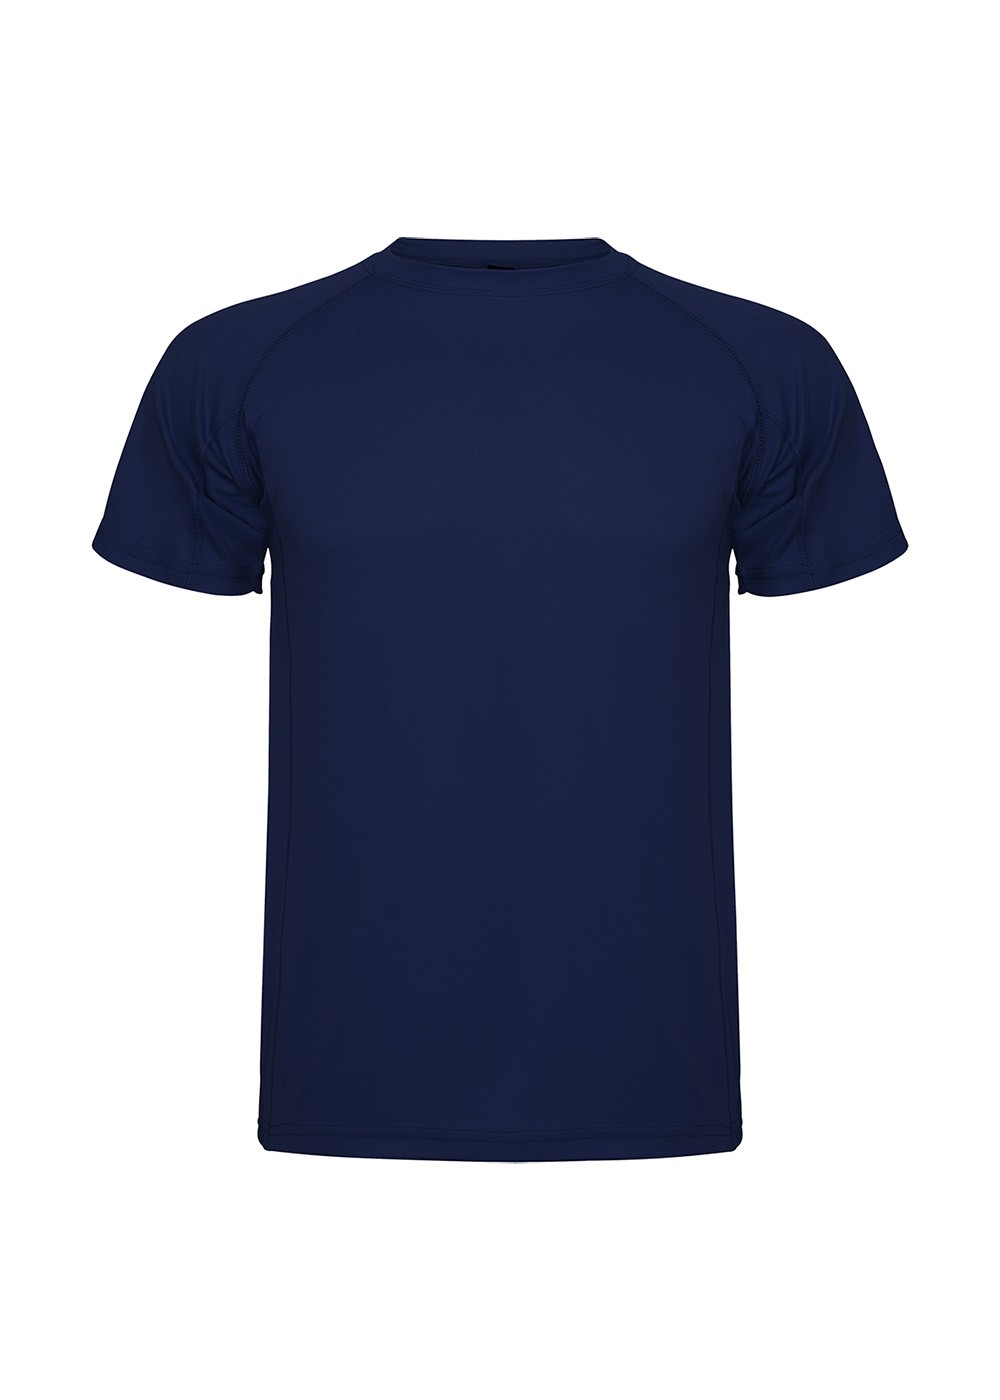 Trænings T-shirt Unisex  Navy Blue